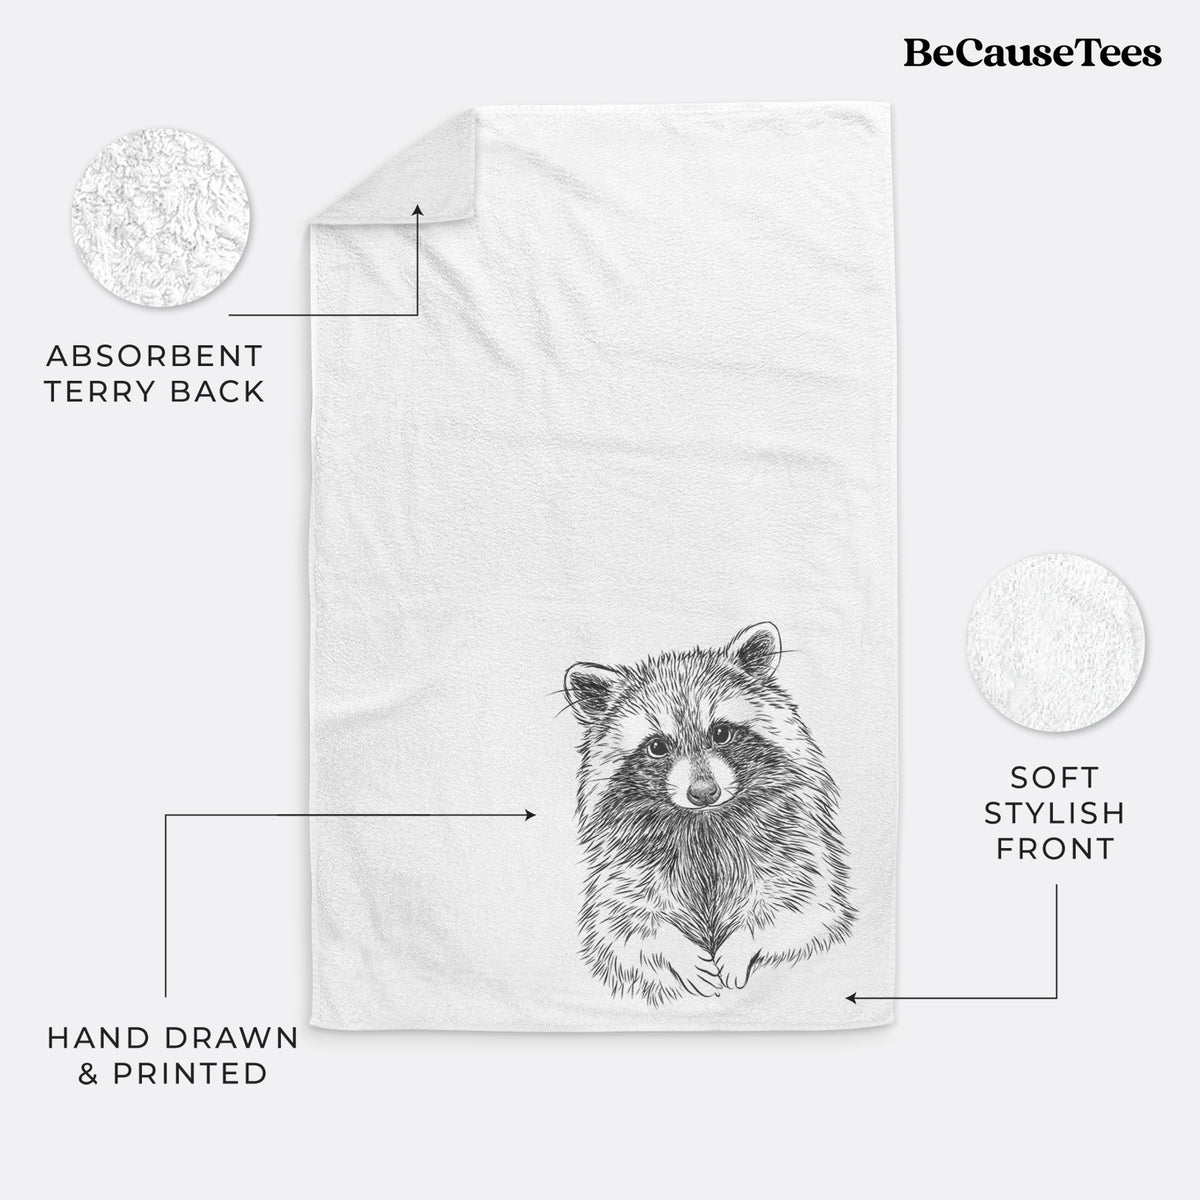 Raccoon - Procyon lotor Hand Towel